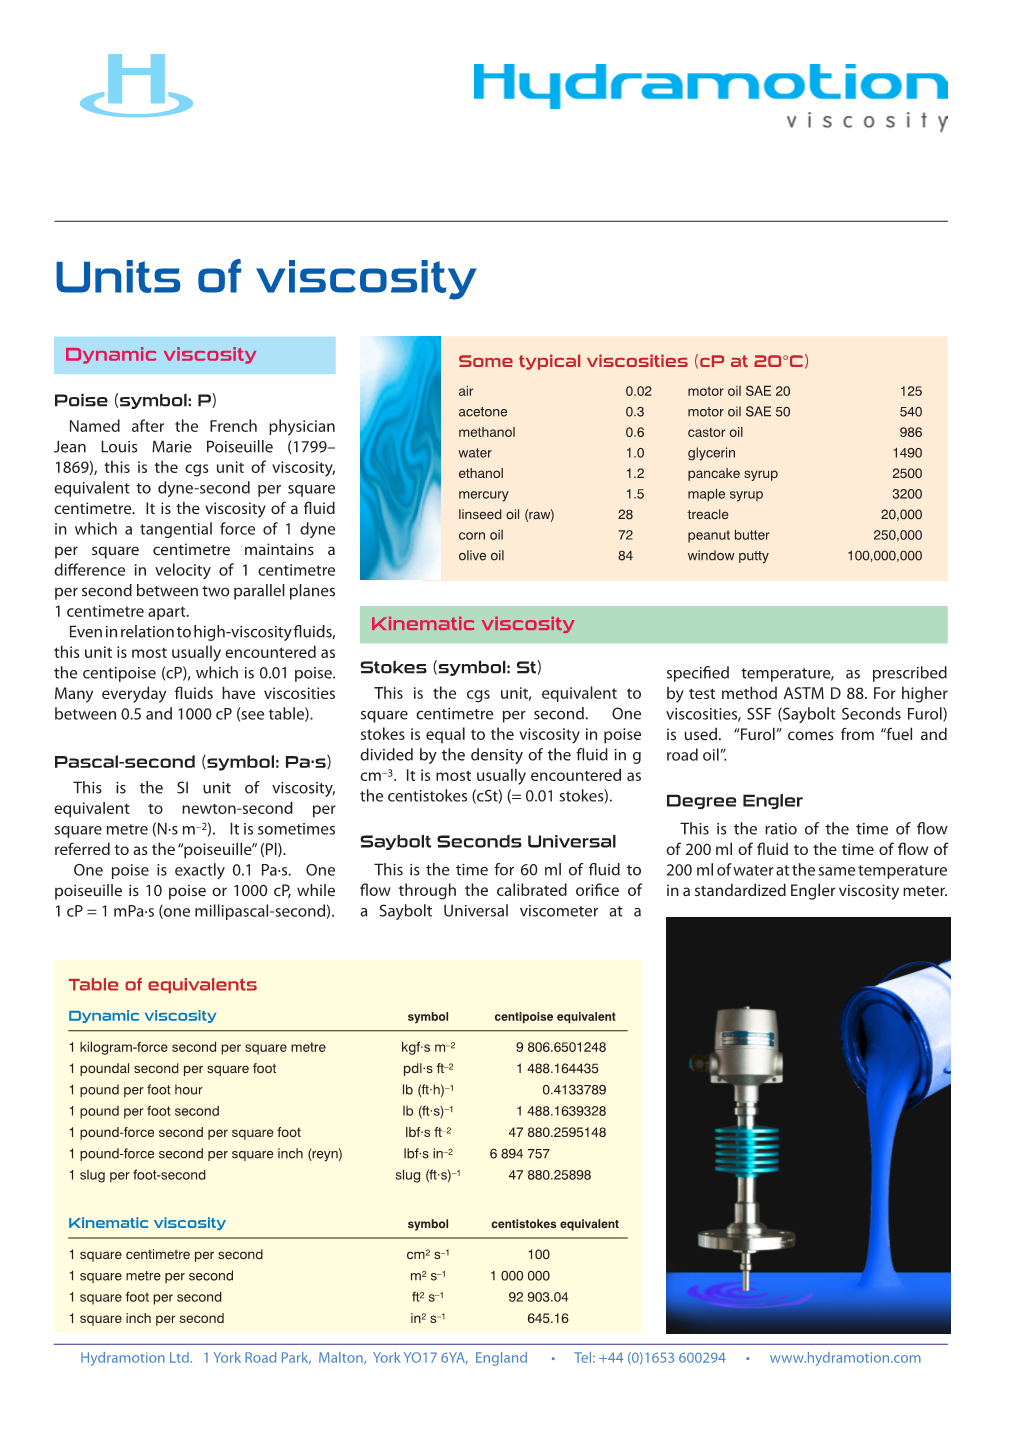 Units of Viscosity